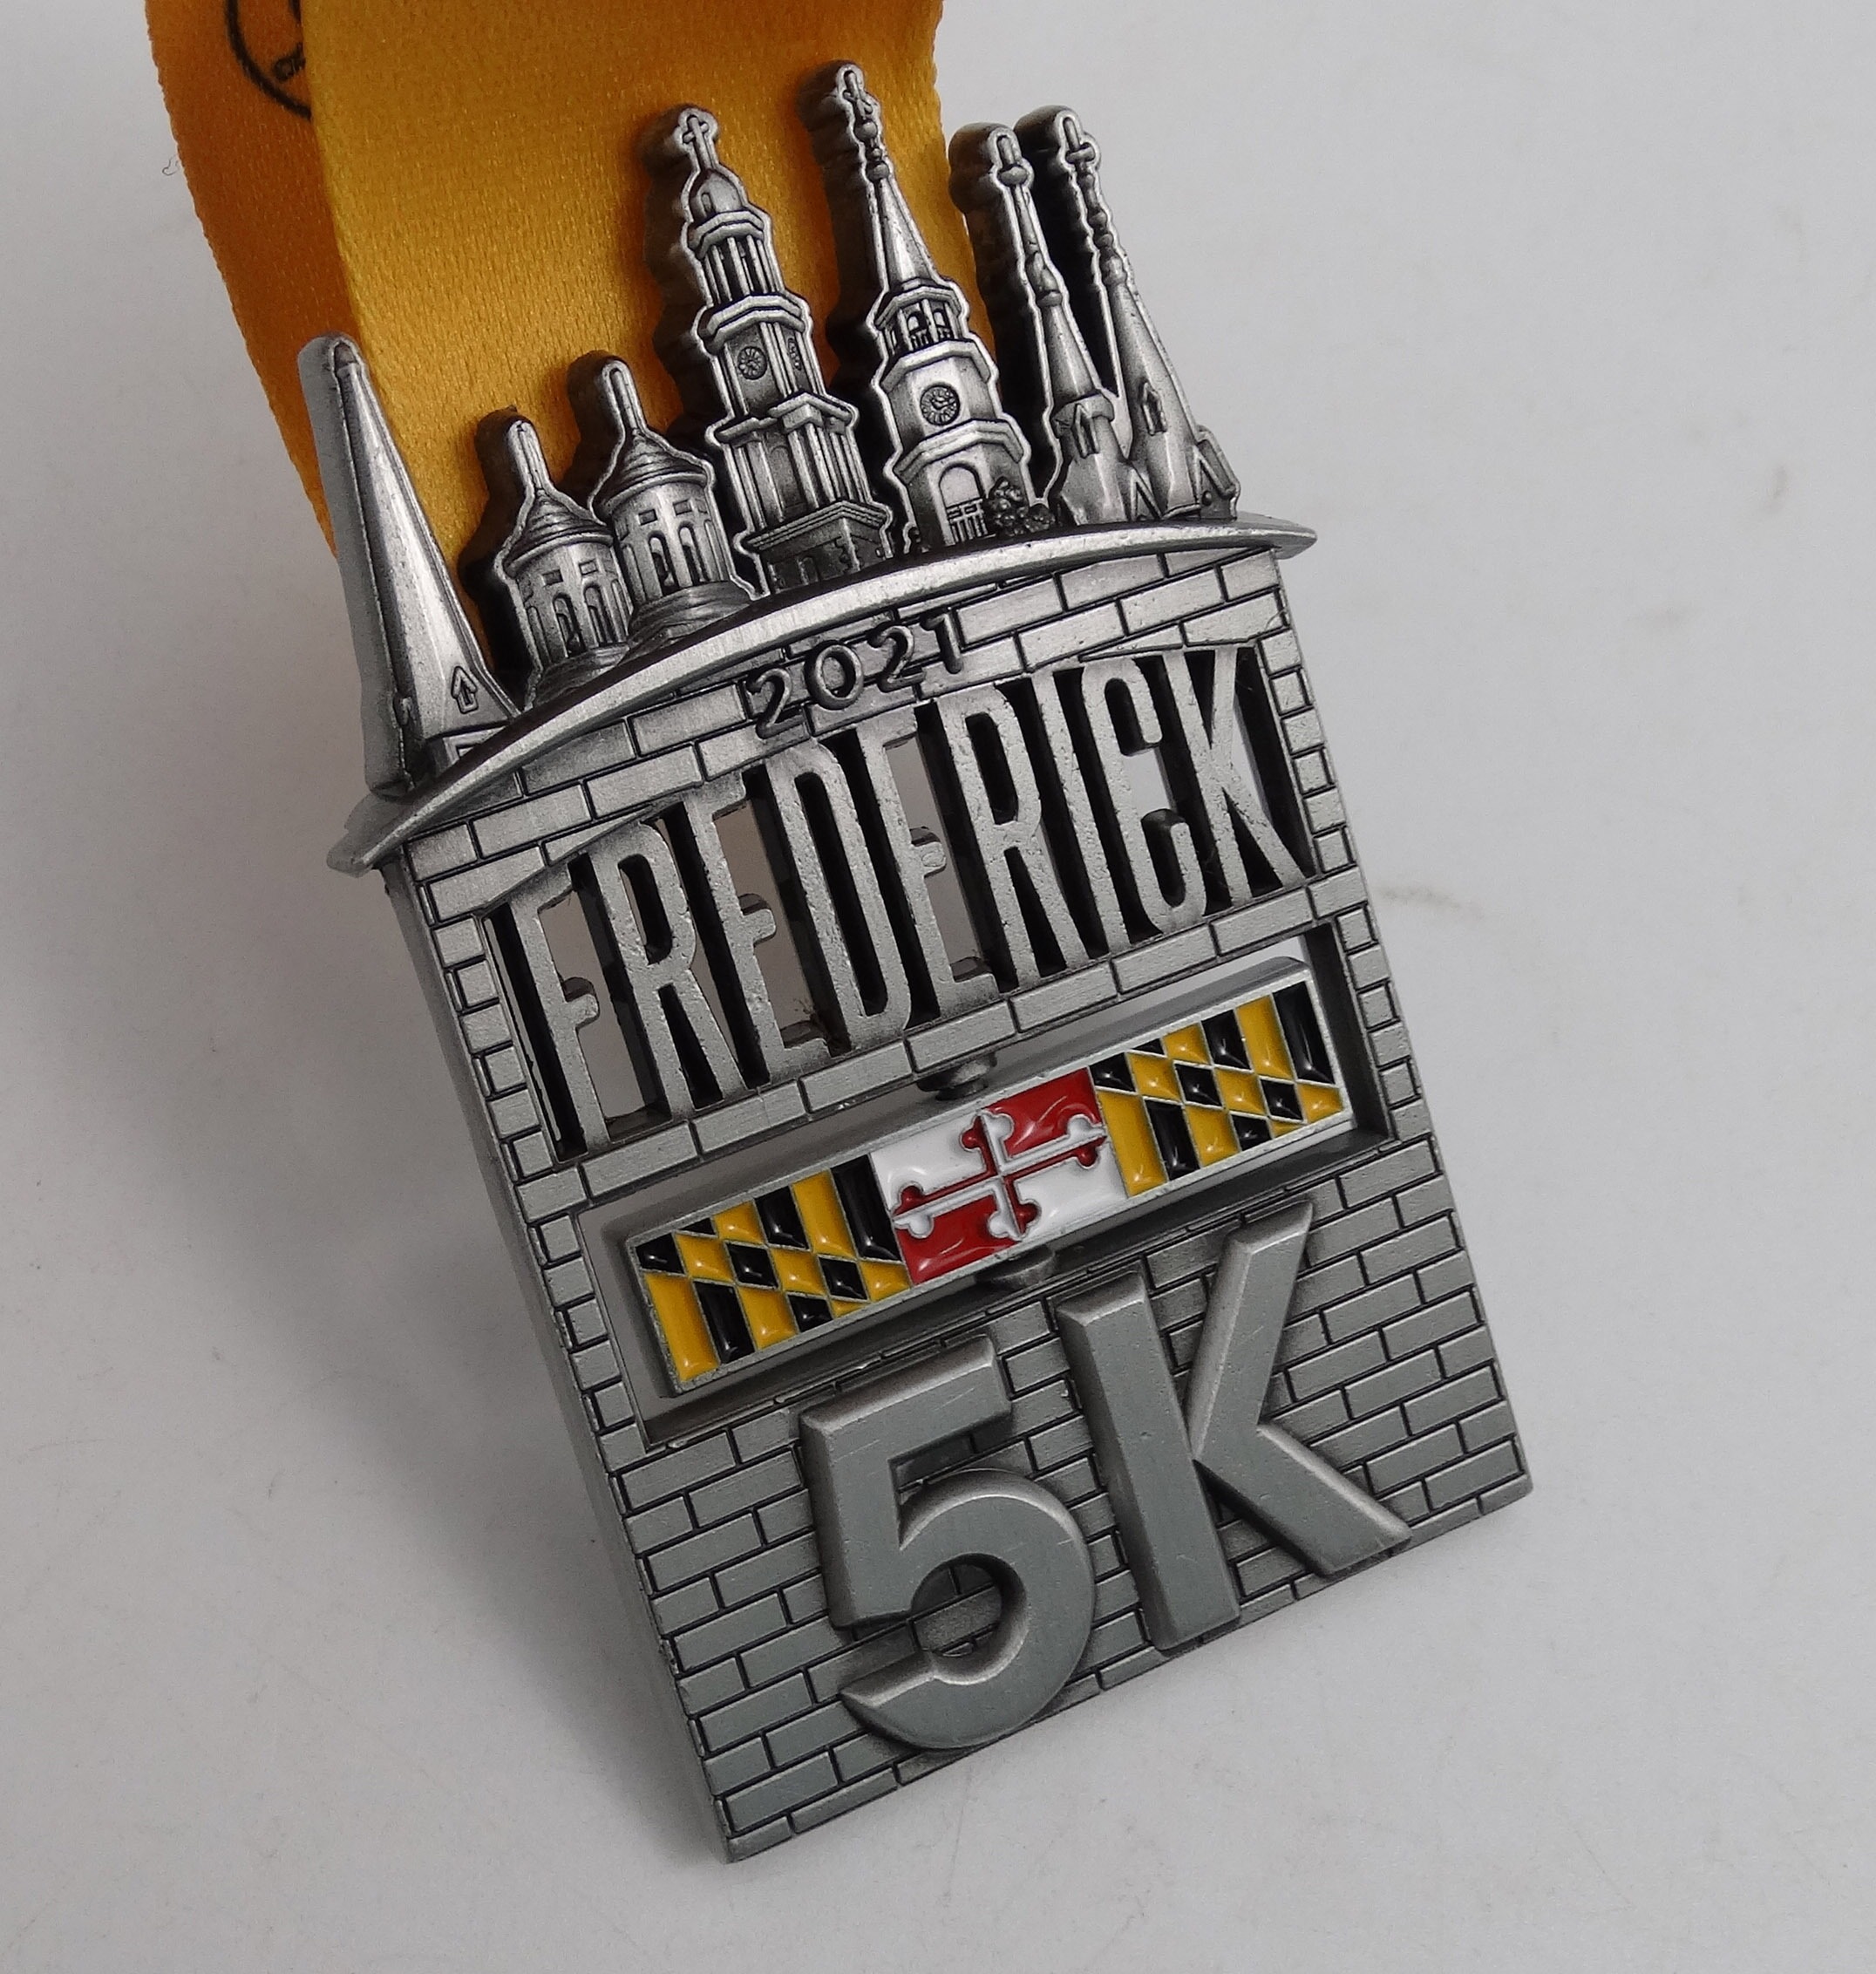 frederick-5k-medal-side-view-12-14